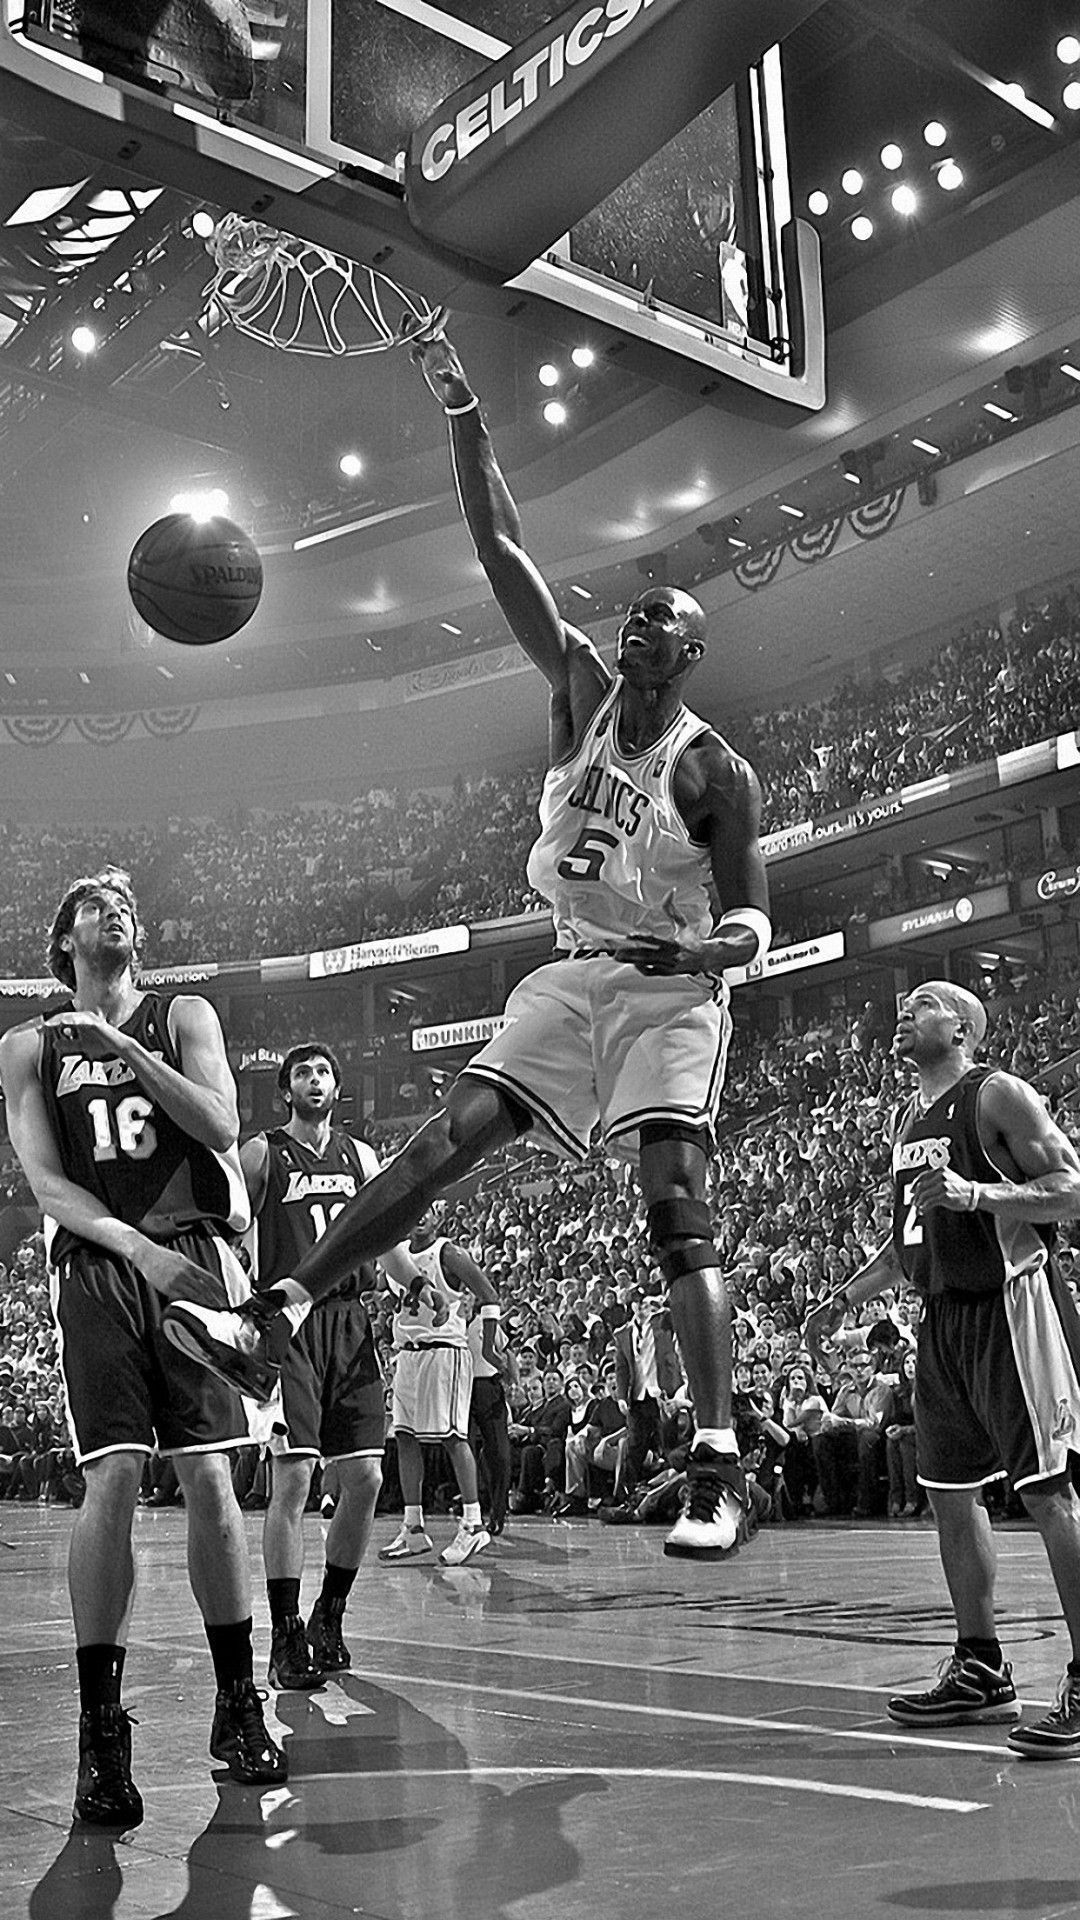 NBA Basketball iPhone 8 Wallpaper Basketball Wallpaper. Basketball wallpaper, Cool basketball wallpaper, Basketball wallpaper hd